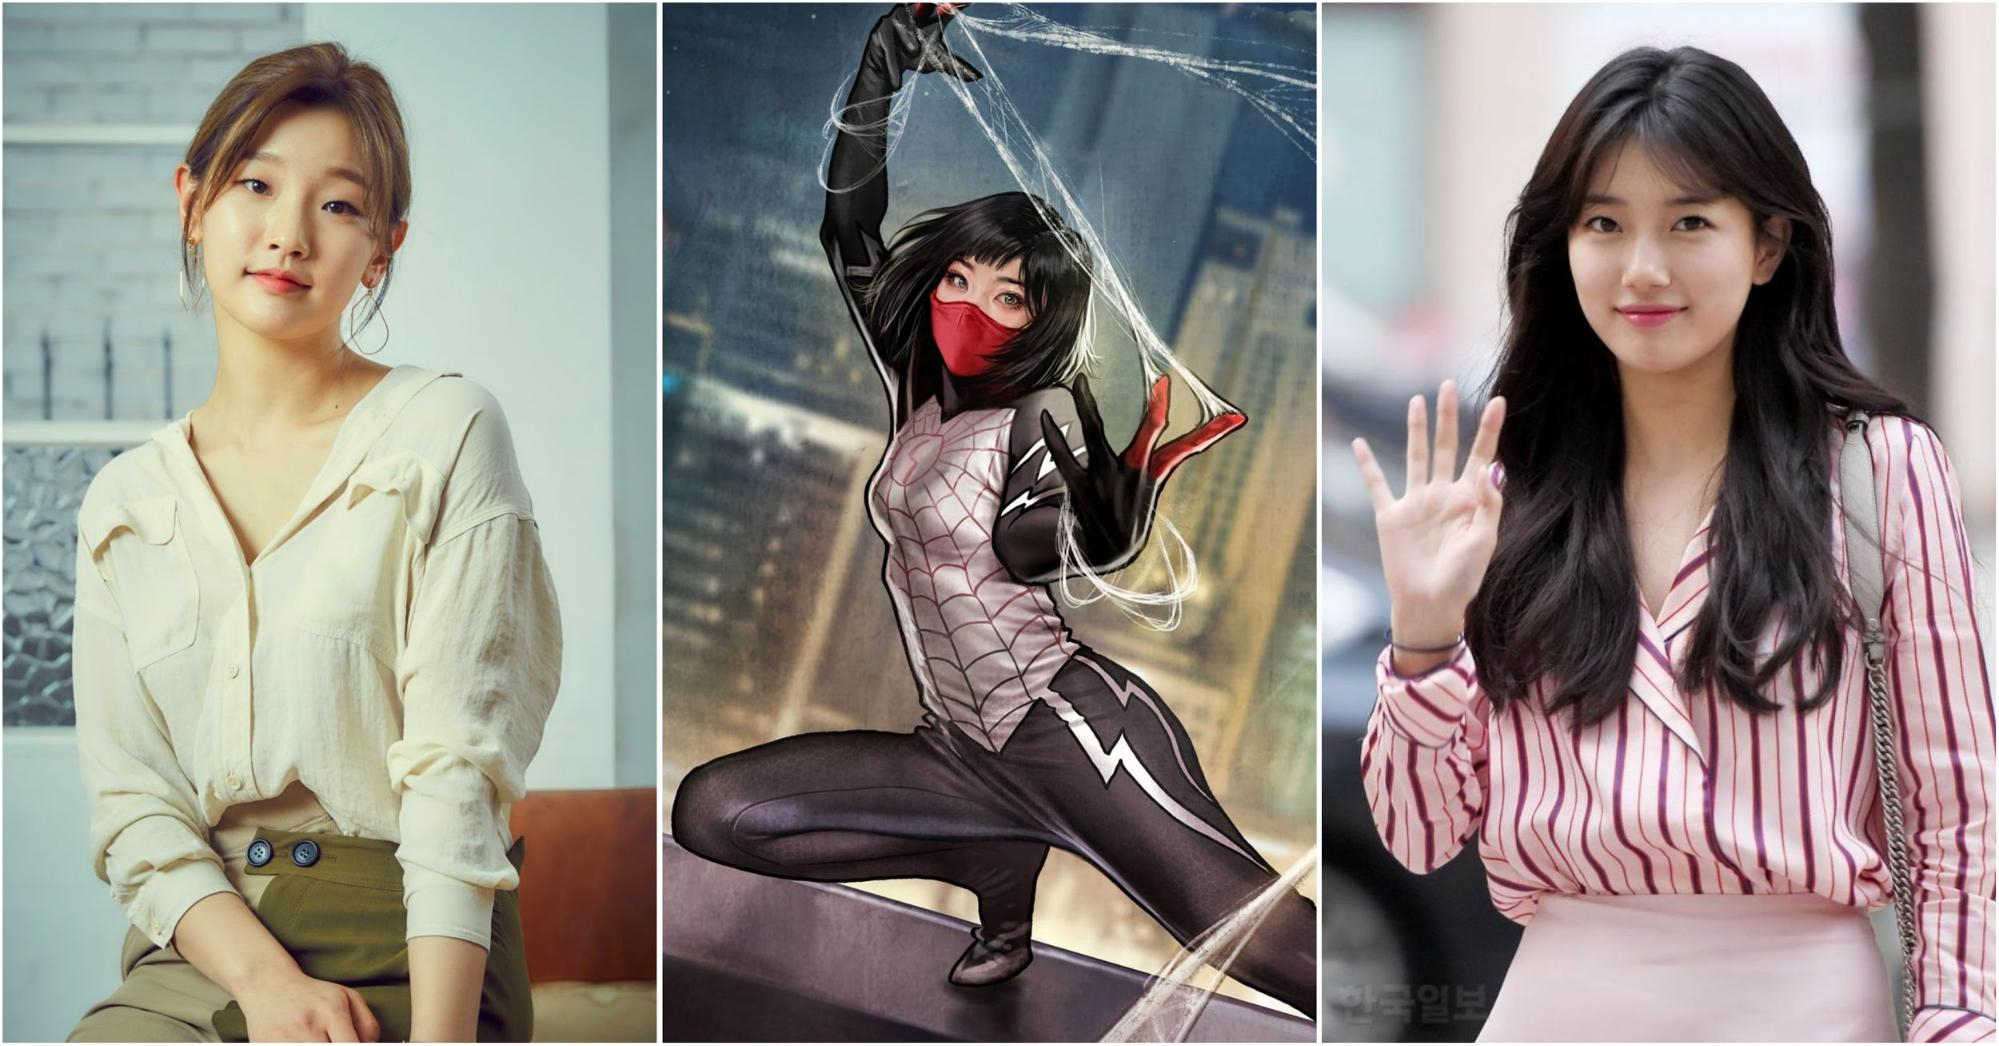 Silk Spider-Man TV Series: Release Date Rumors, Cast, Plot Leaks